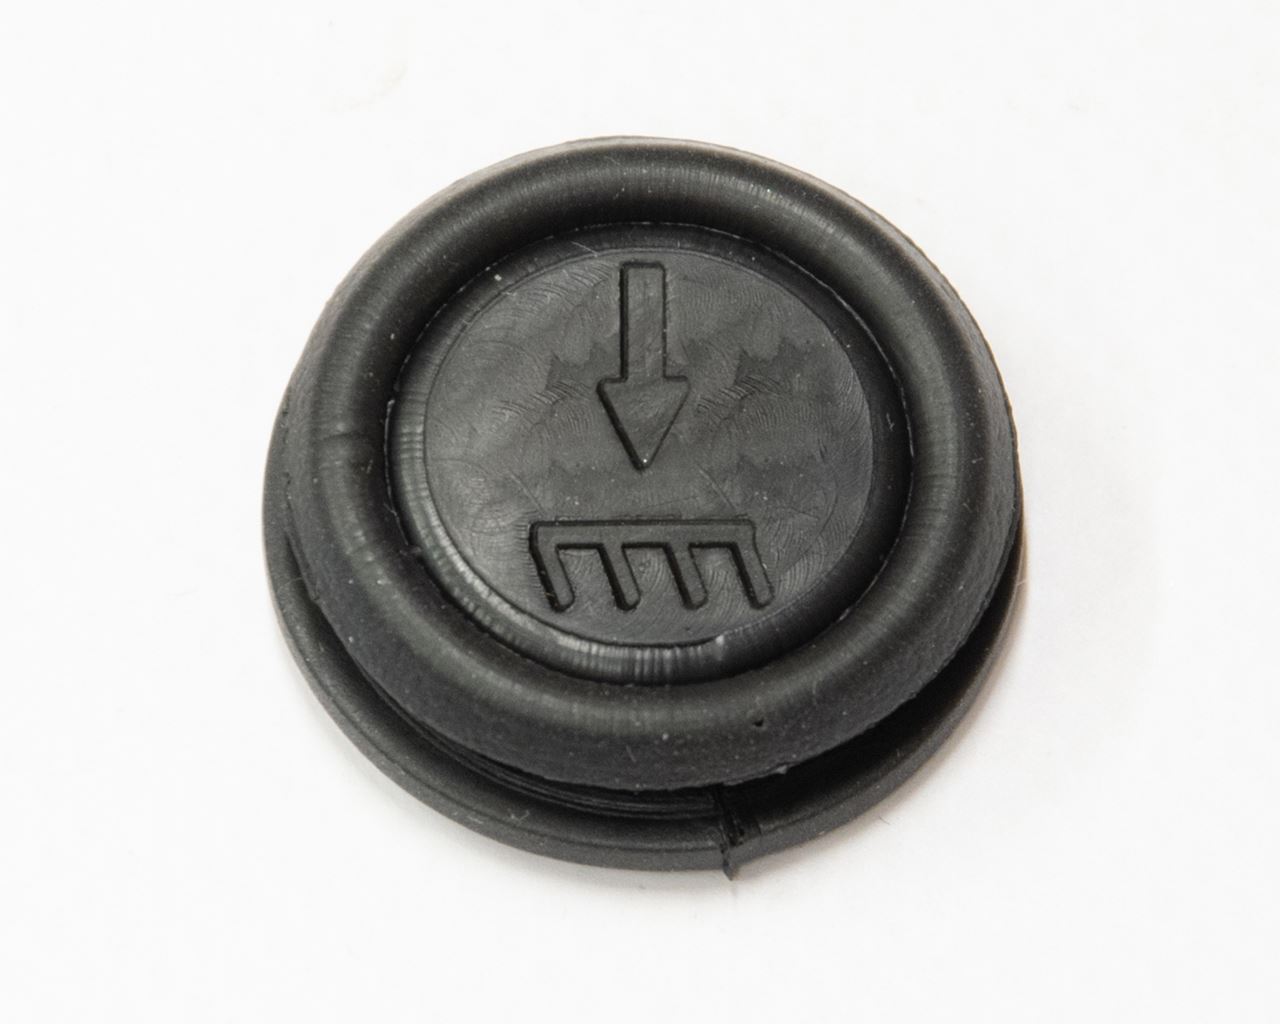 Lift table spare part - Button, controller (Black/Down)